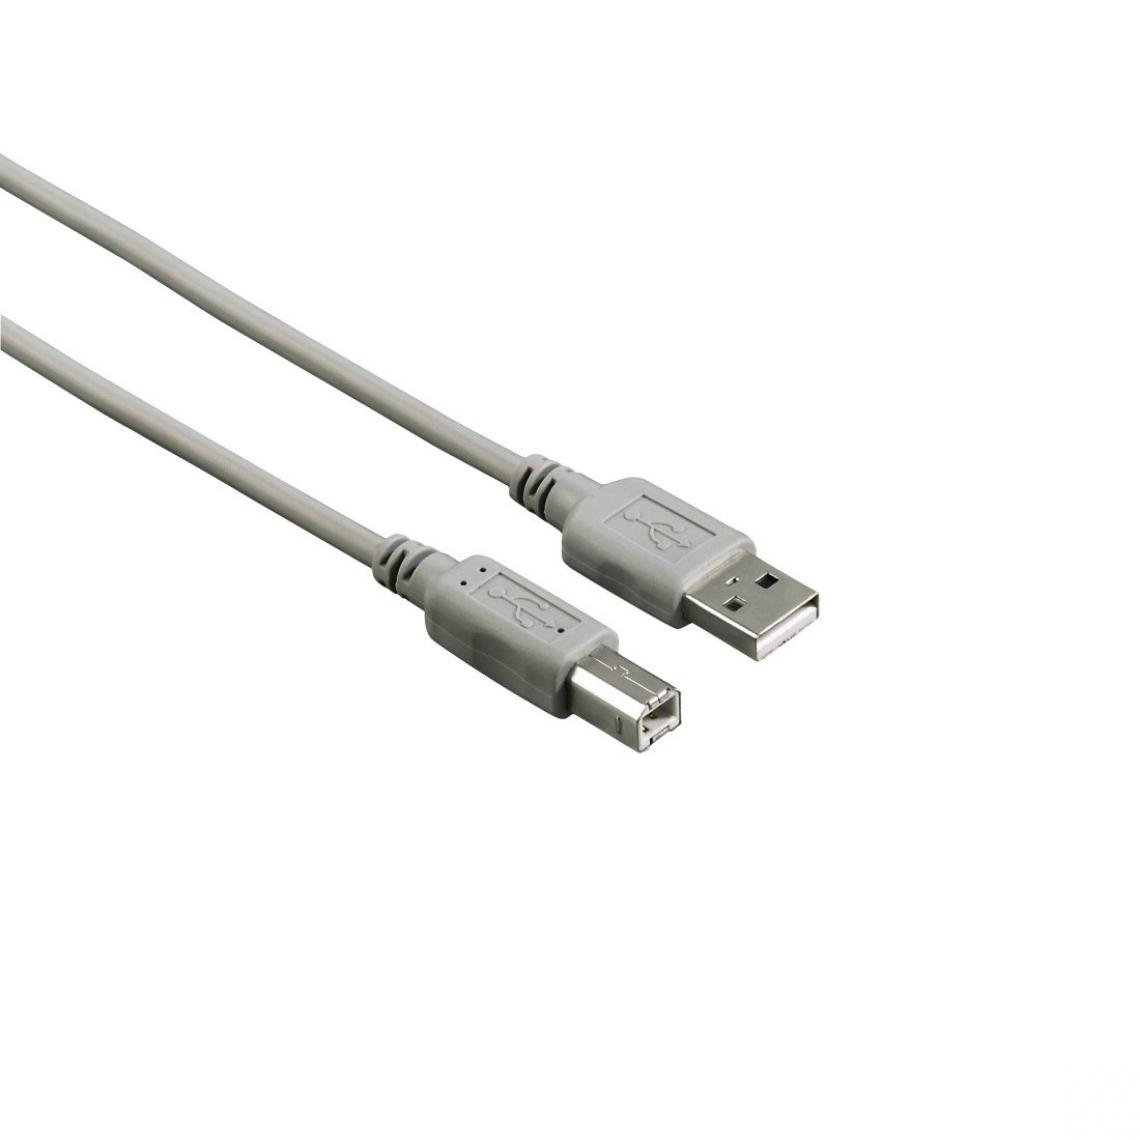 Ineck - INECK - cable USB A / B | cable pour imprimante |1.8 (metres) - Câble antenne